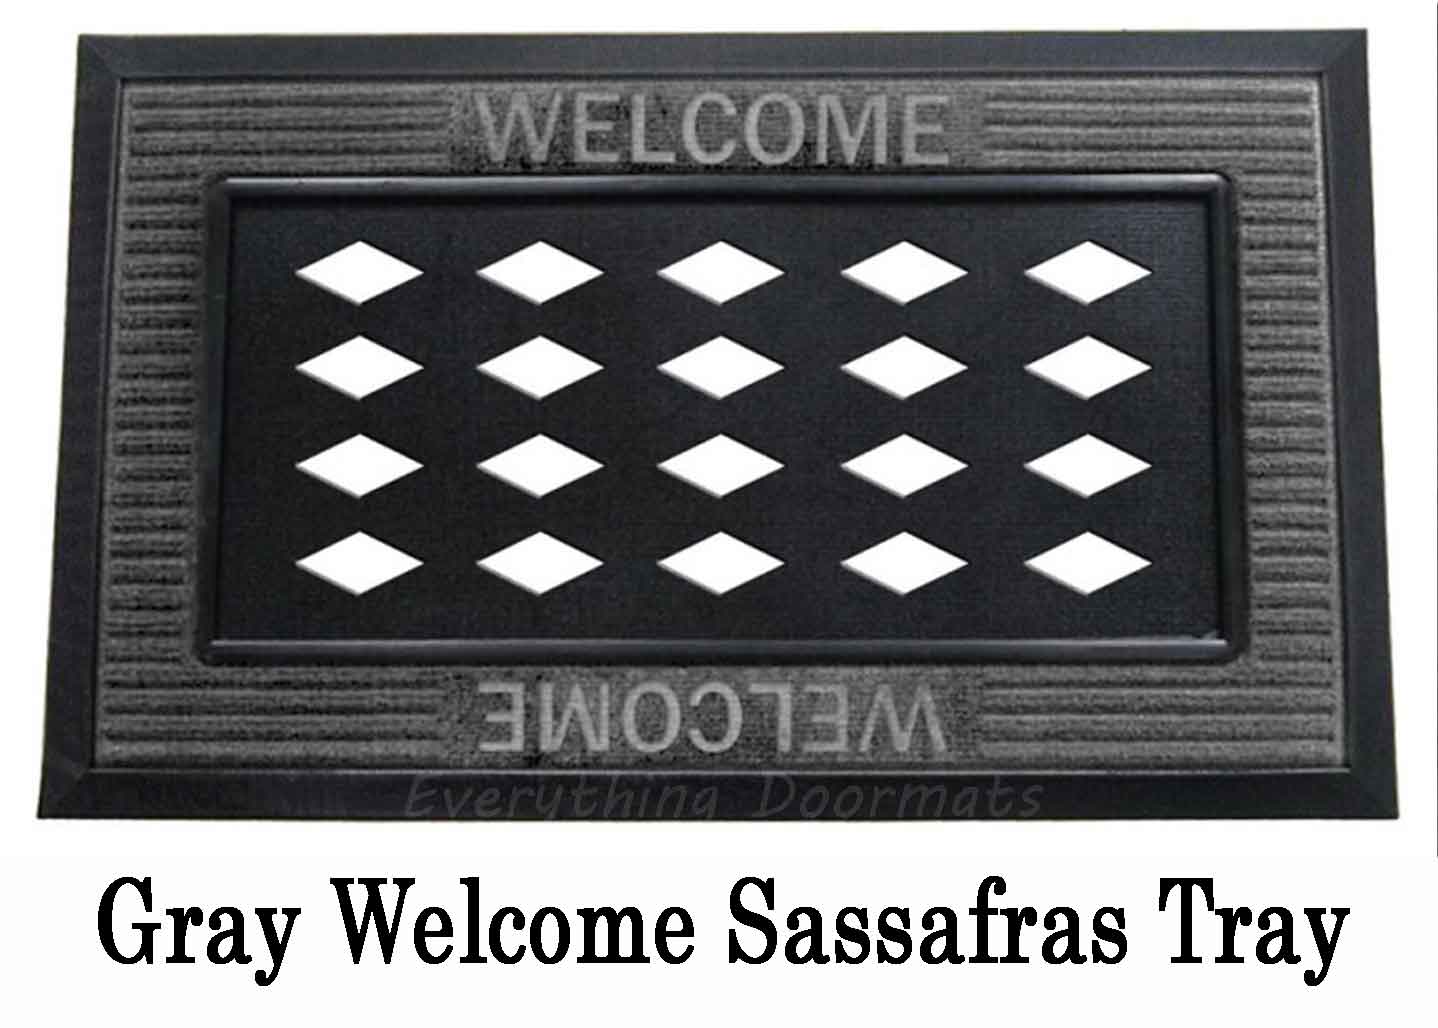 Welcome Sassafras Mat Tray,431000C 